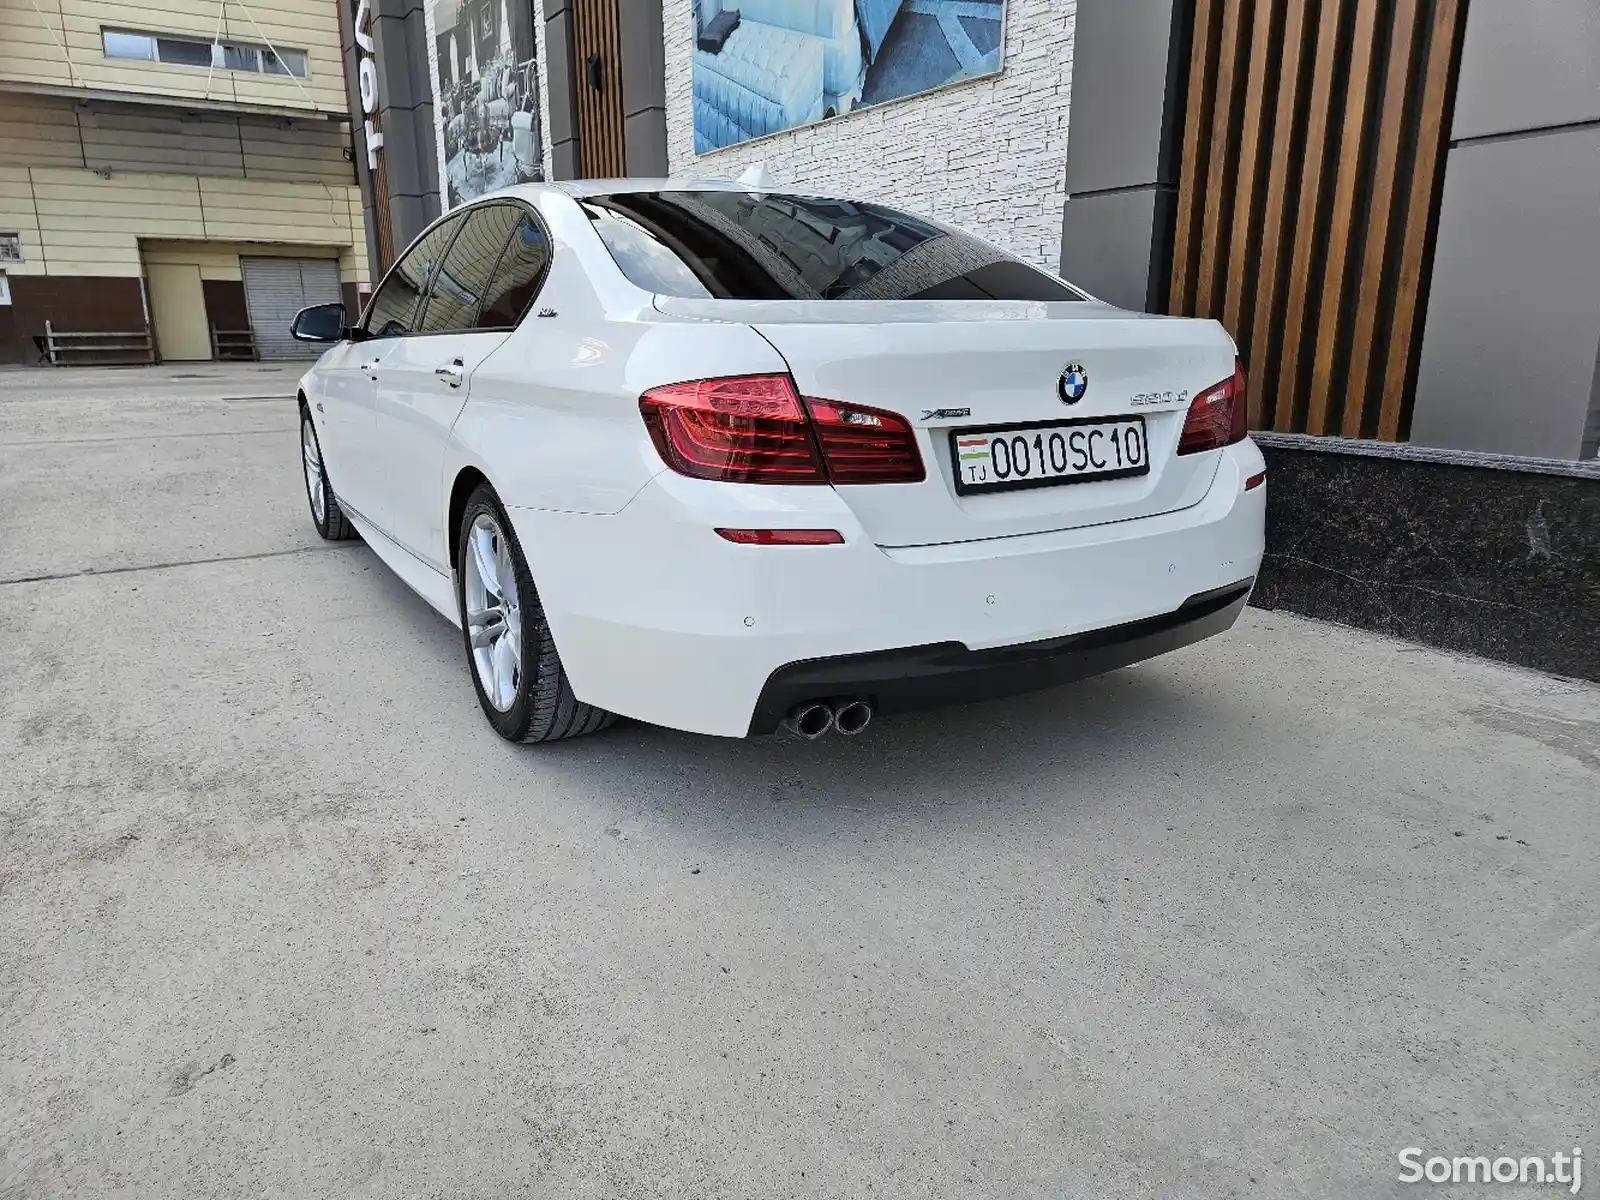 BMW 5 series, 2016-10